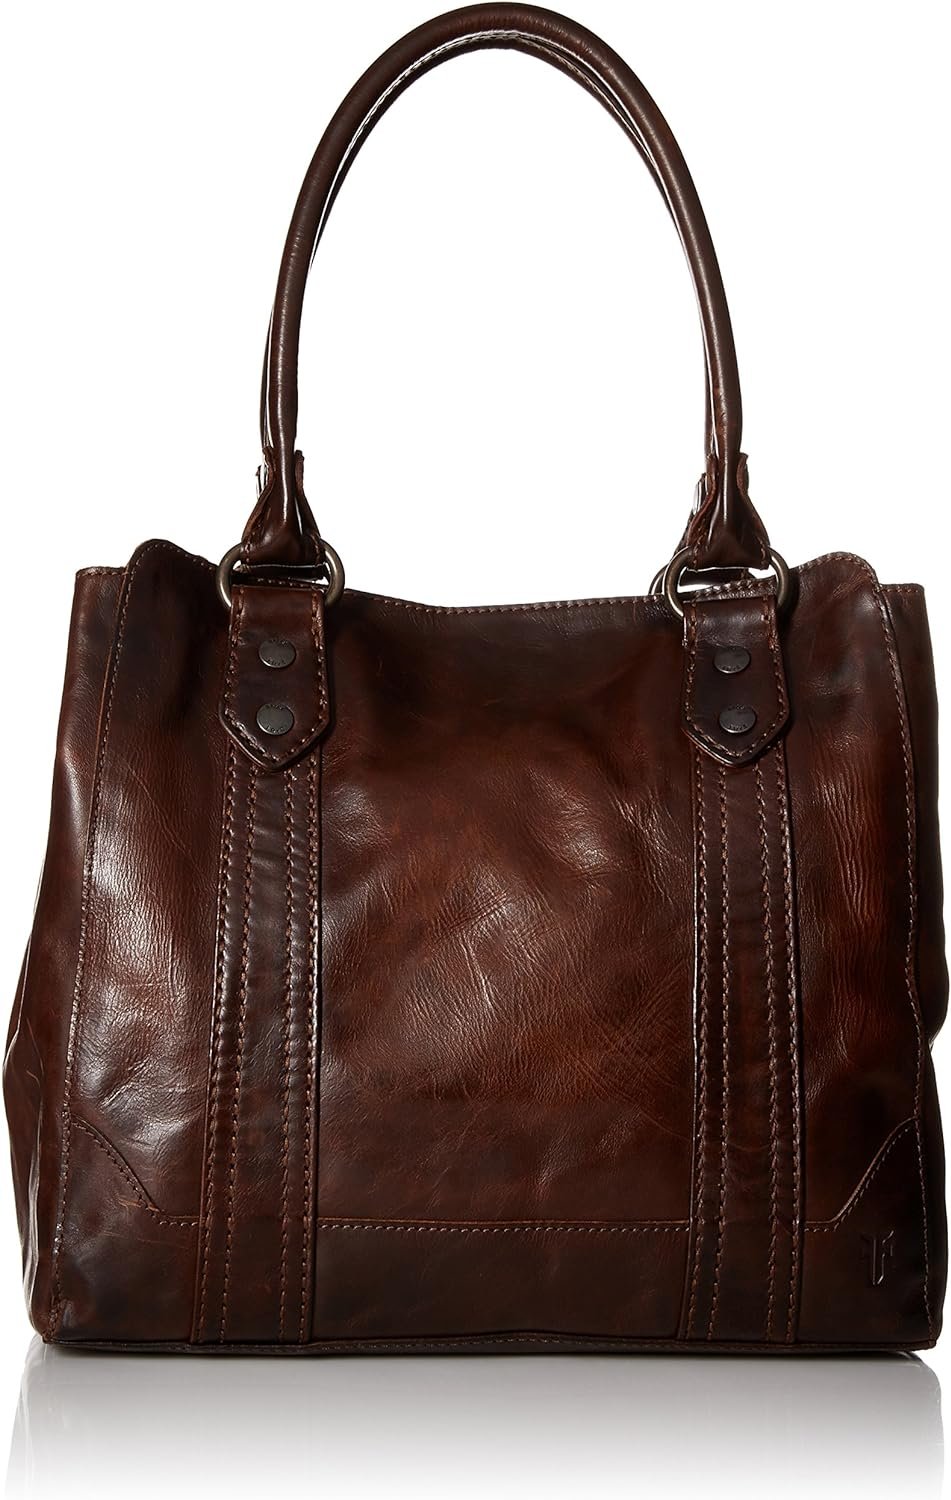 FRYE Rubie Distressed Brown Genuine Leather Purse Shoulder Bag Tote |  Genuine leather purse, Leather purses, Purses